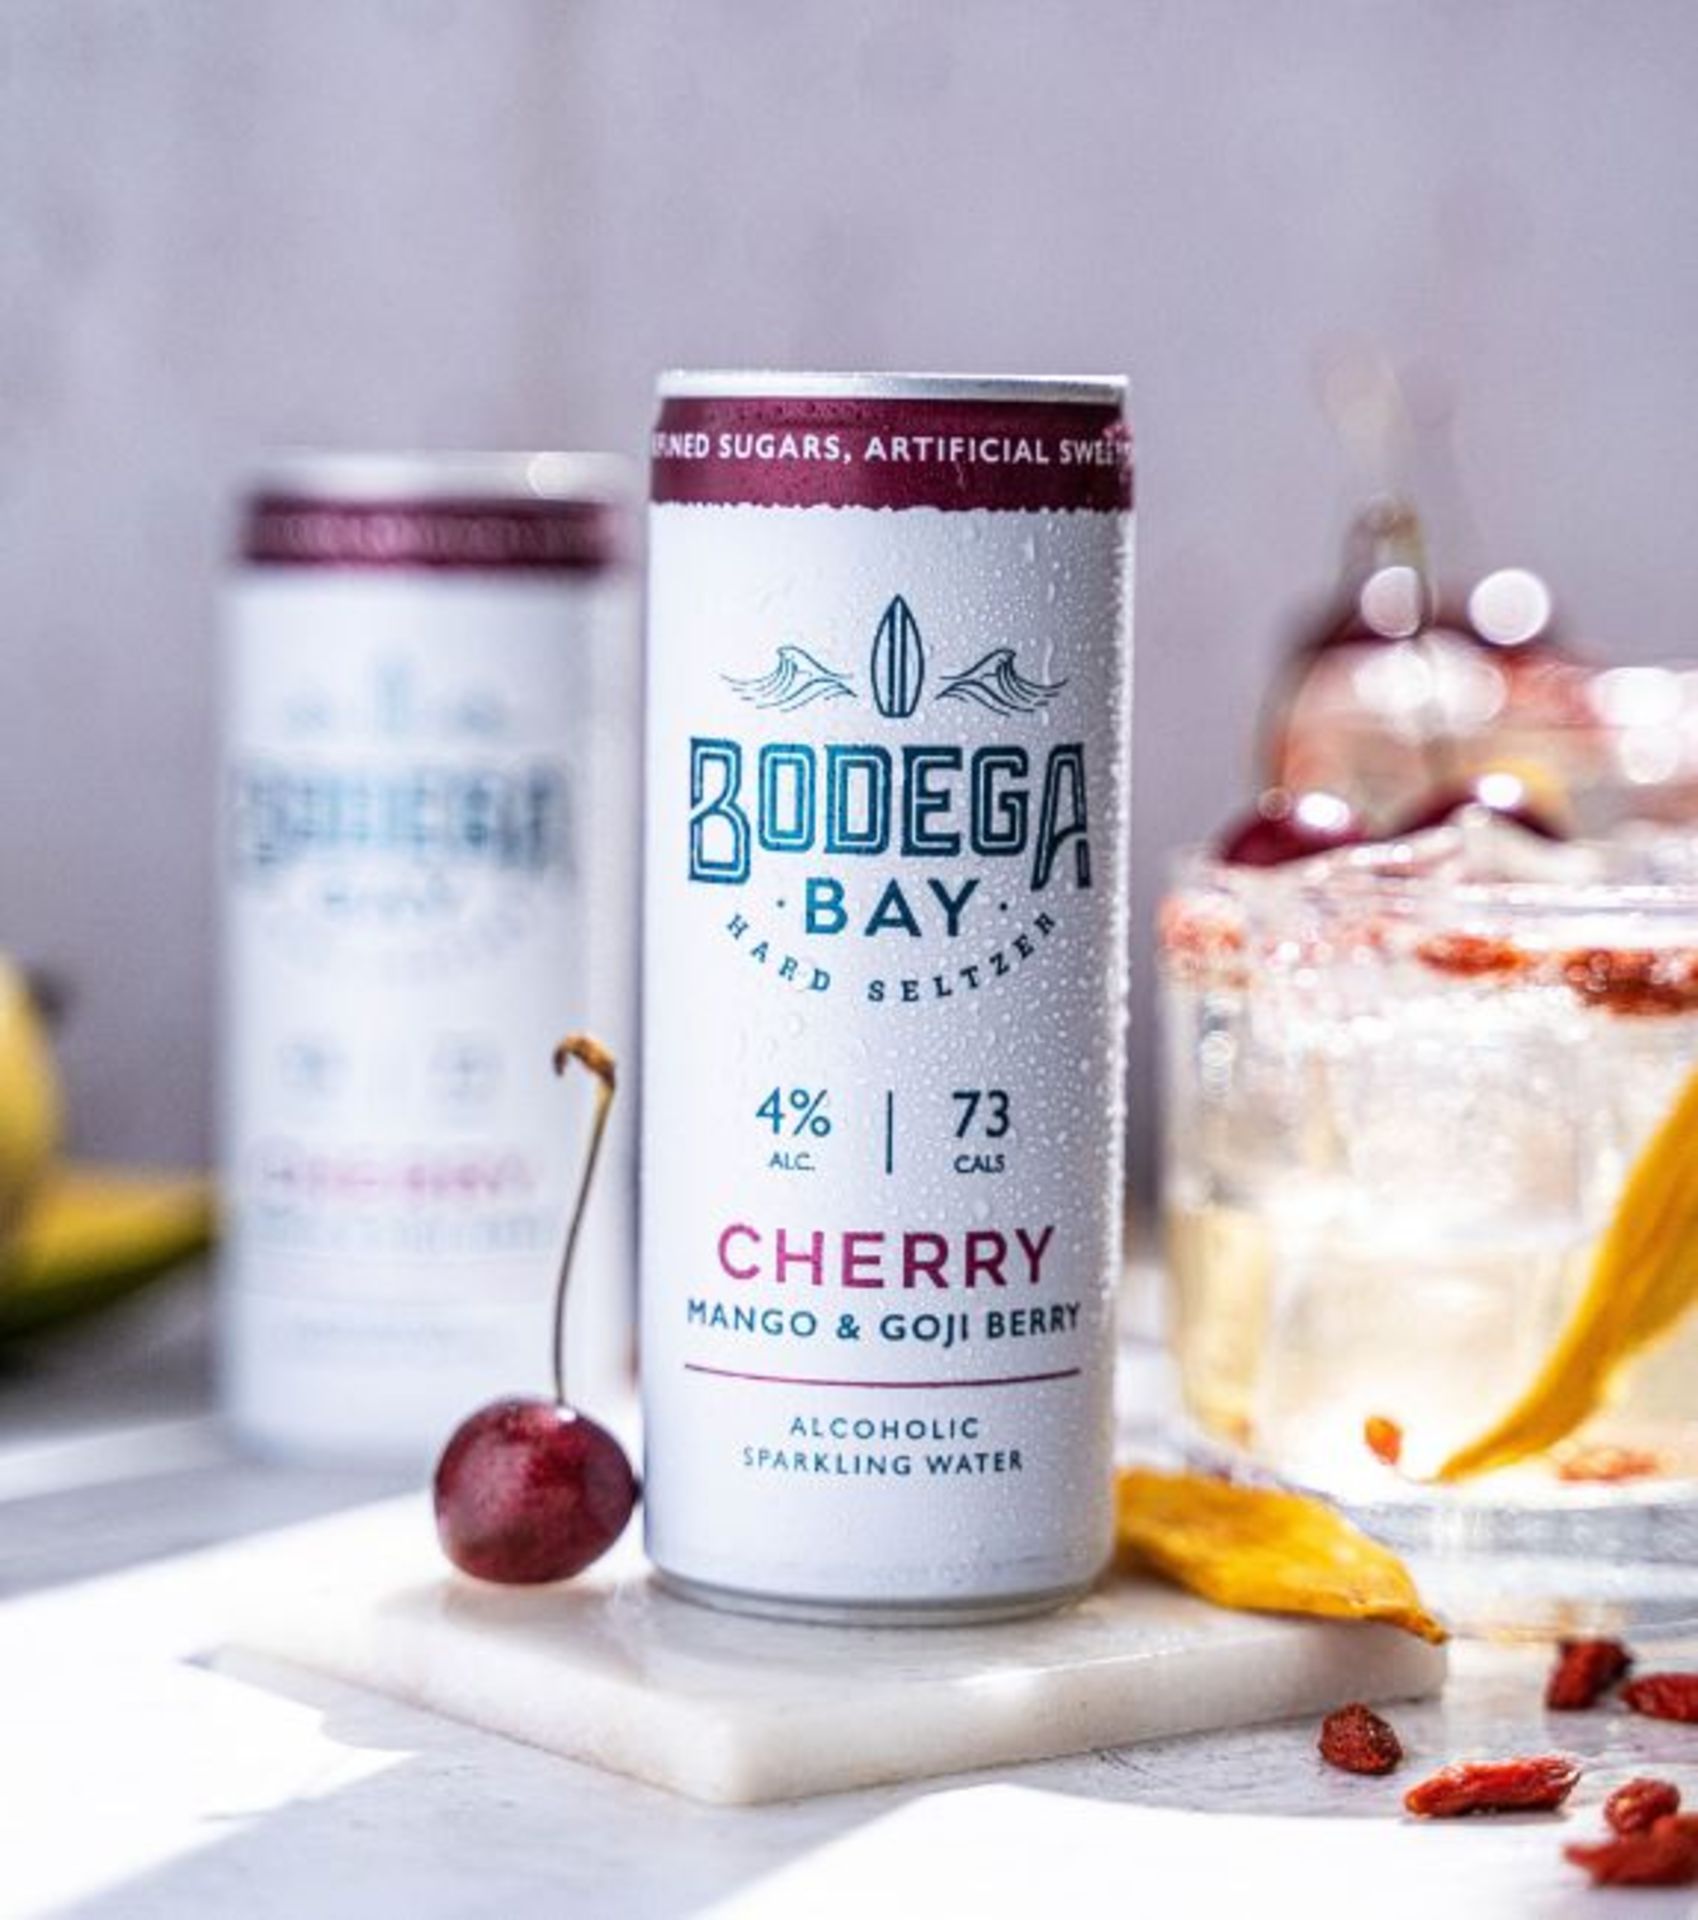 24 x Bodega Bay Hard Seltzer 250ml Alcoholic Sparkling Water Drinks - Cherry Mango & Goji Berry - 4% - Image 2 of 6